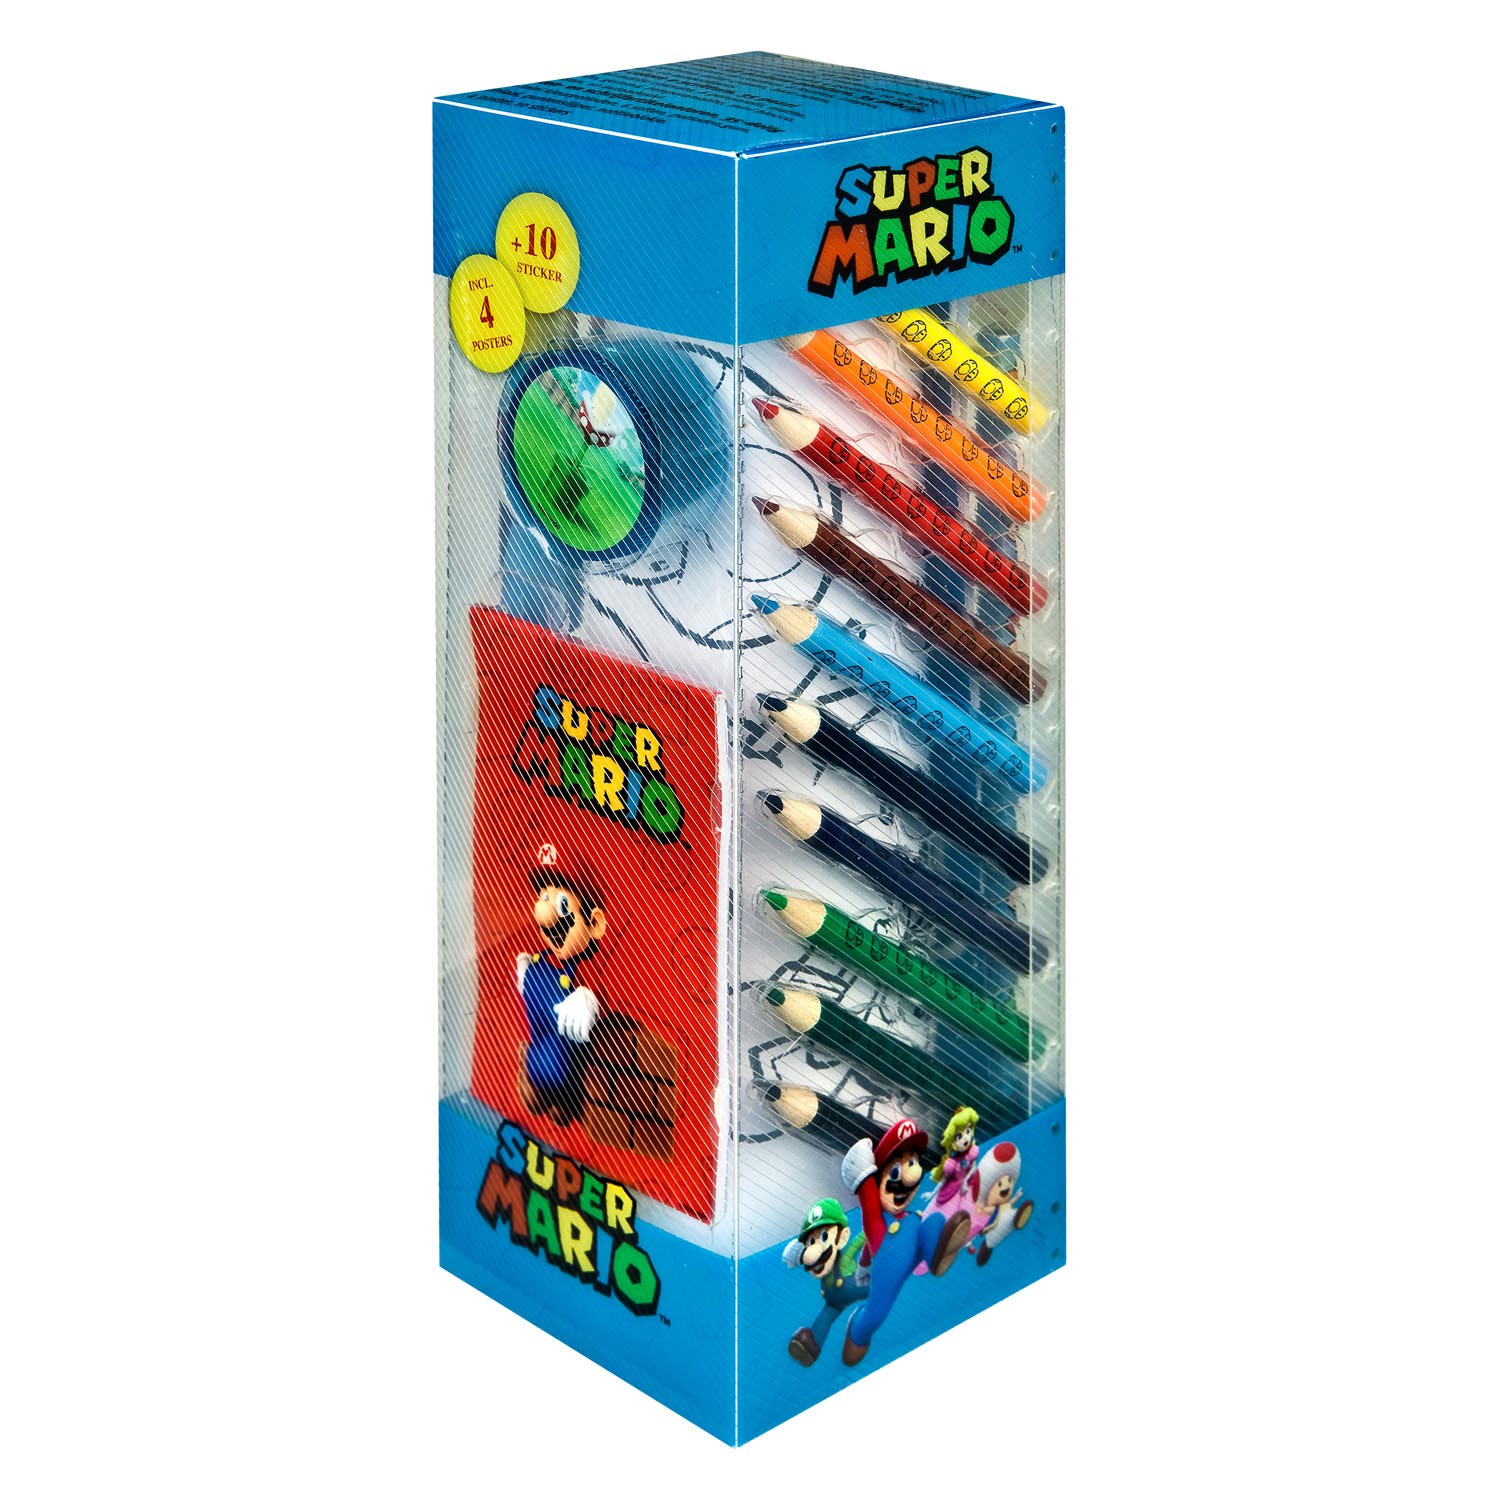 Super Mario Stationery Set Tower